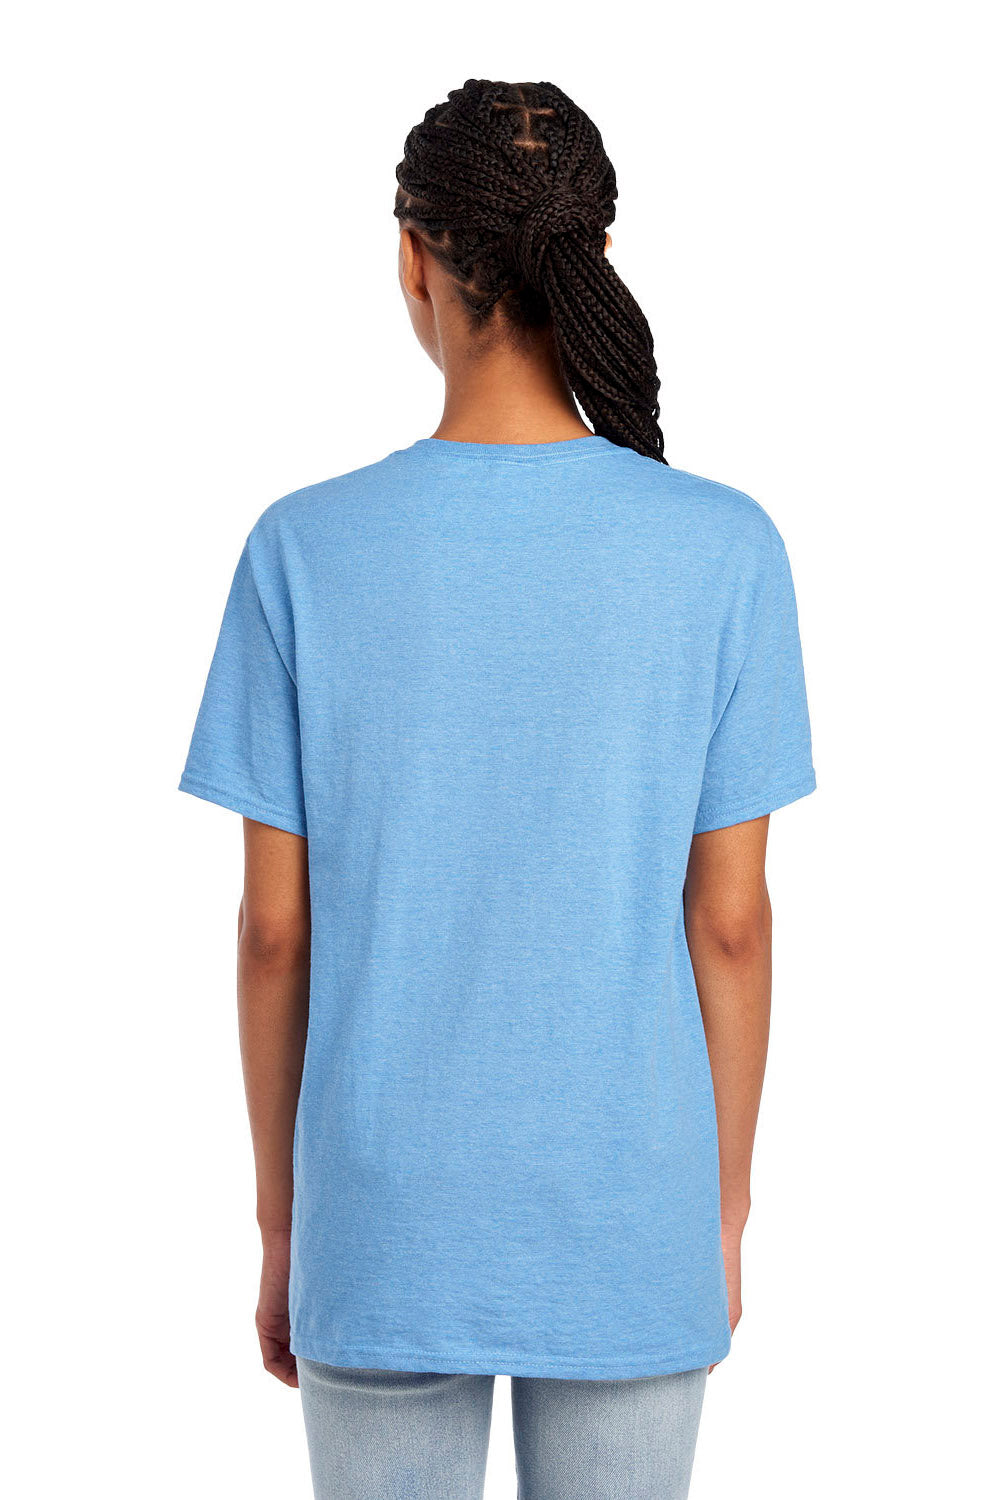 Fruit Of The Loom 3930/3931/3930R Mens HD Jersey Short Sleeve Crewneck T-Shirt Heather Carolina Blue Back